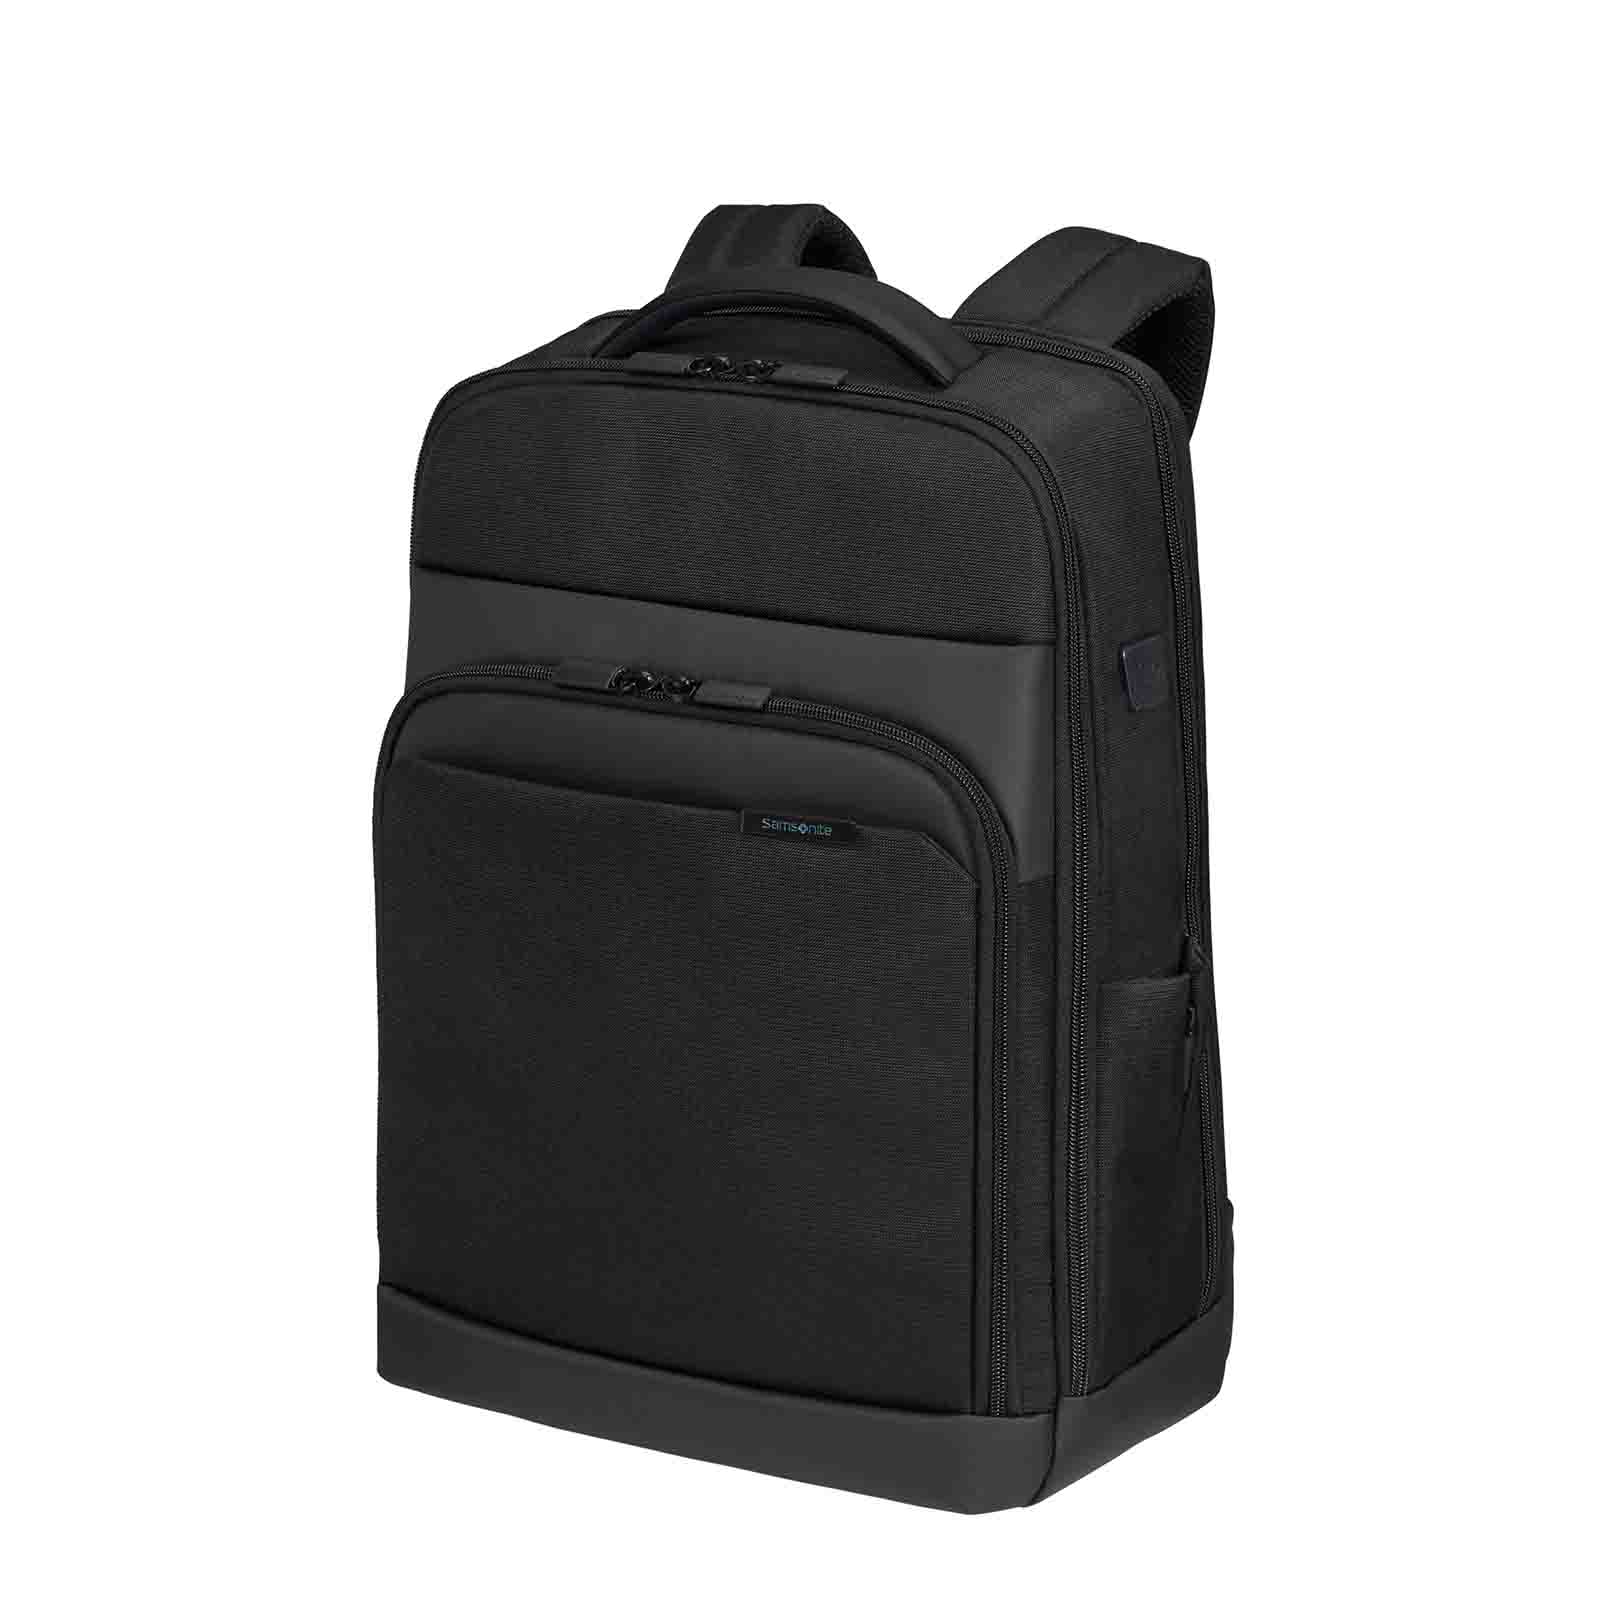 Samsonite-Mysight-17-Inch-Laptop-Backpack-Black-Front-Angle